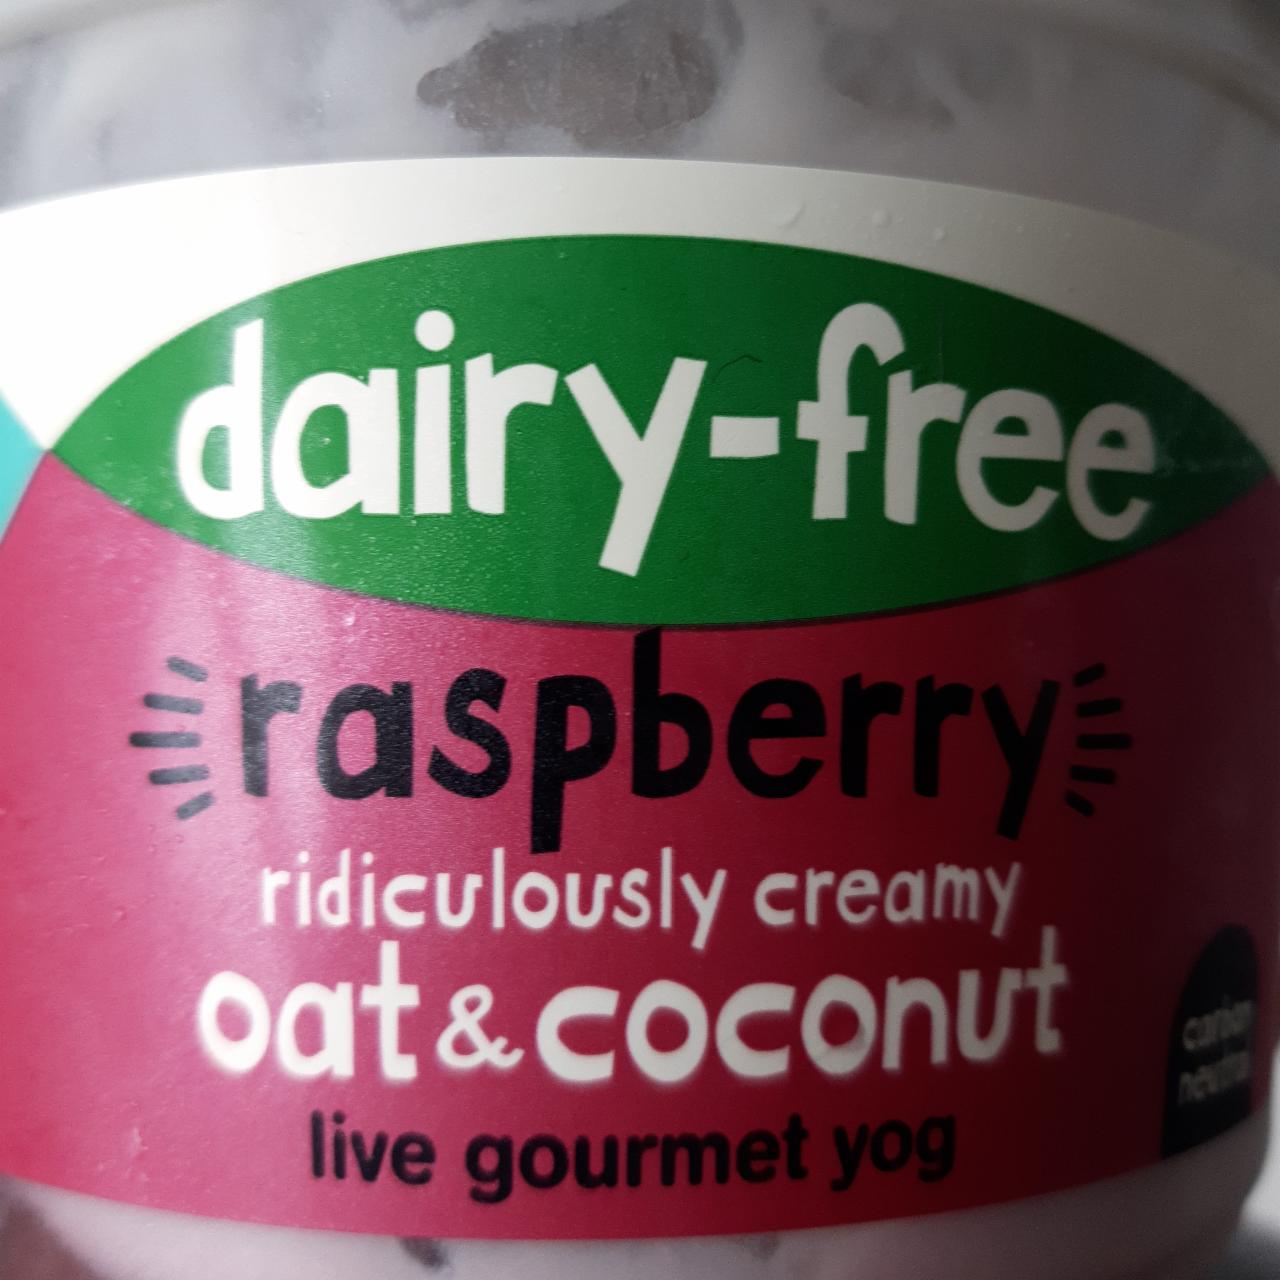 Fotografie - Raspberry ridiculously creamy oat & coconut diary-free